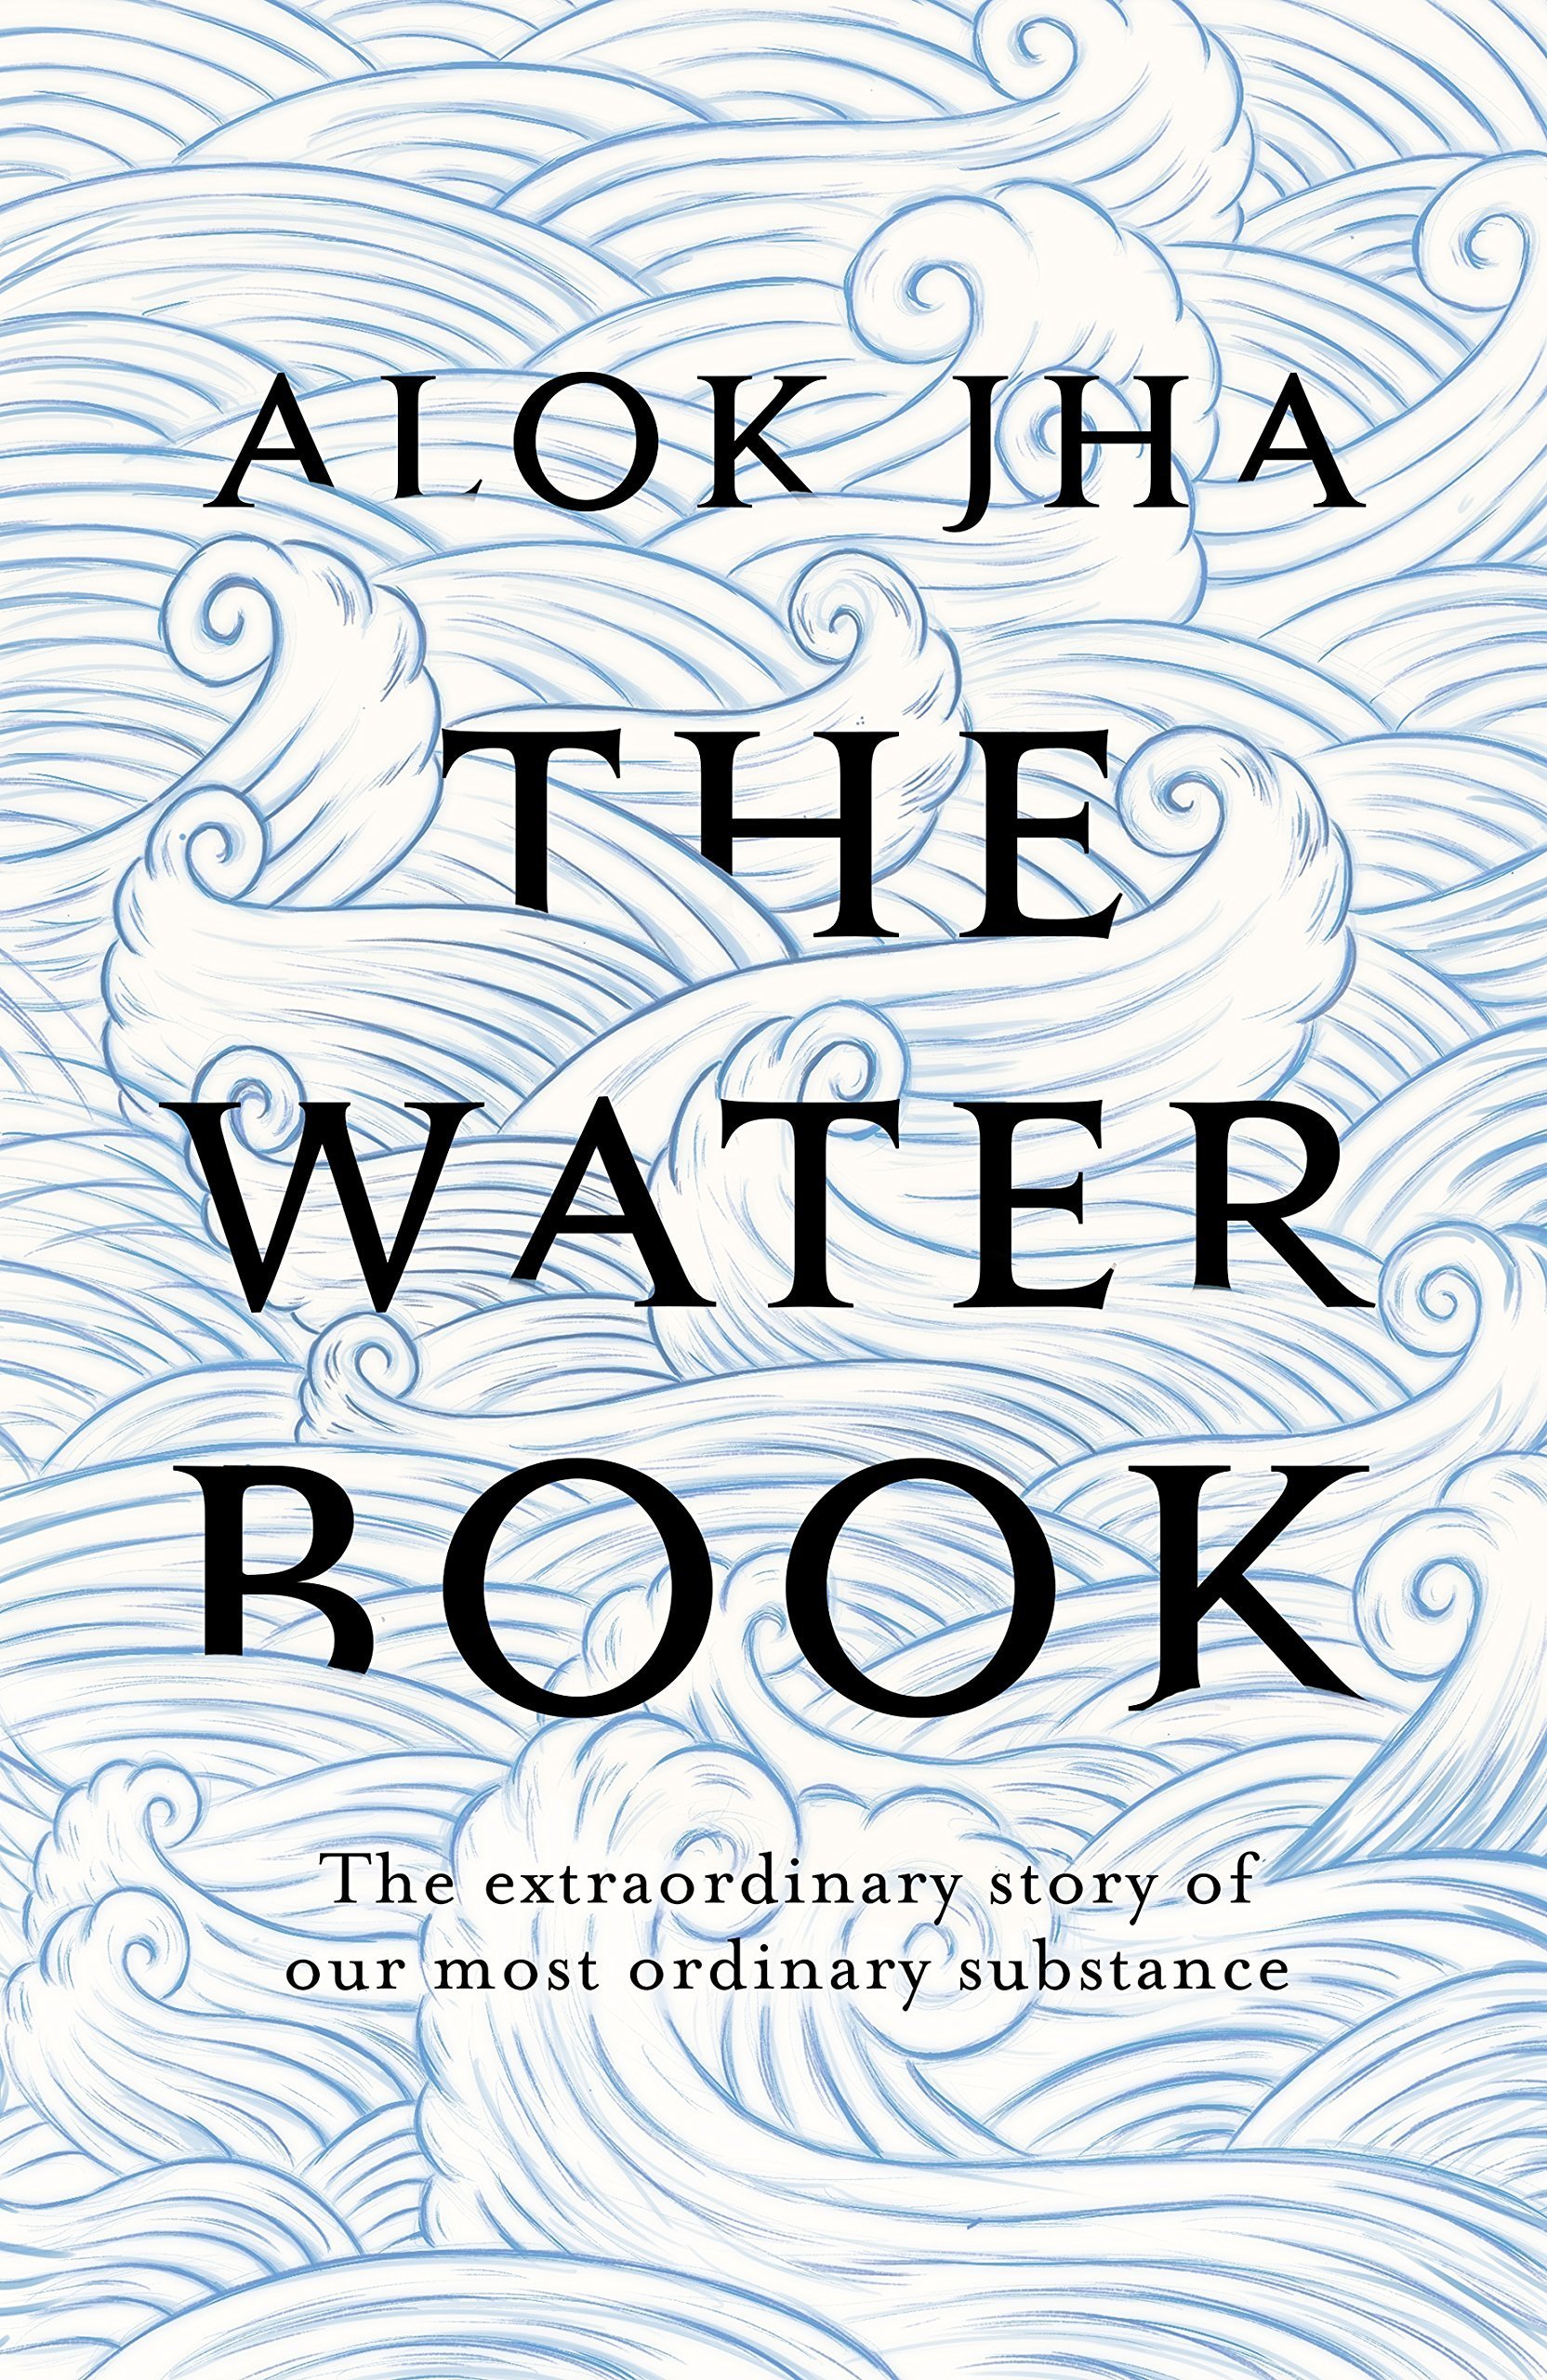 Be water book. Water book. Книги о воде. Вода голубая книга. Water be book.